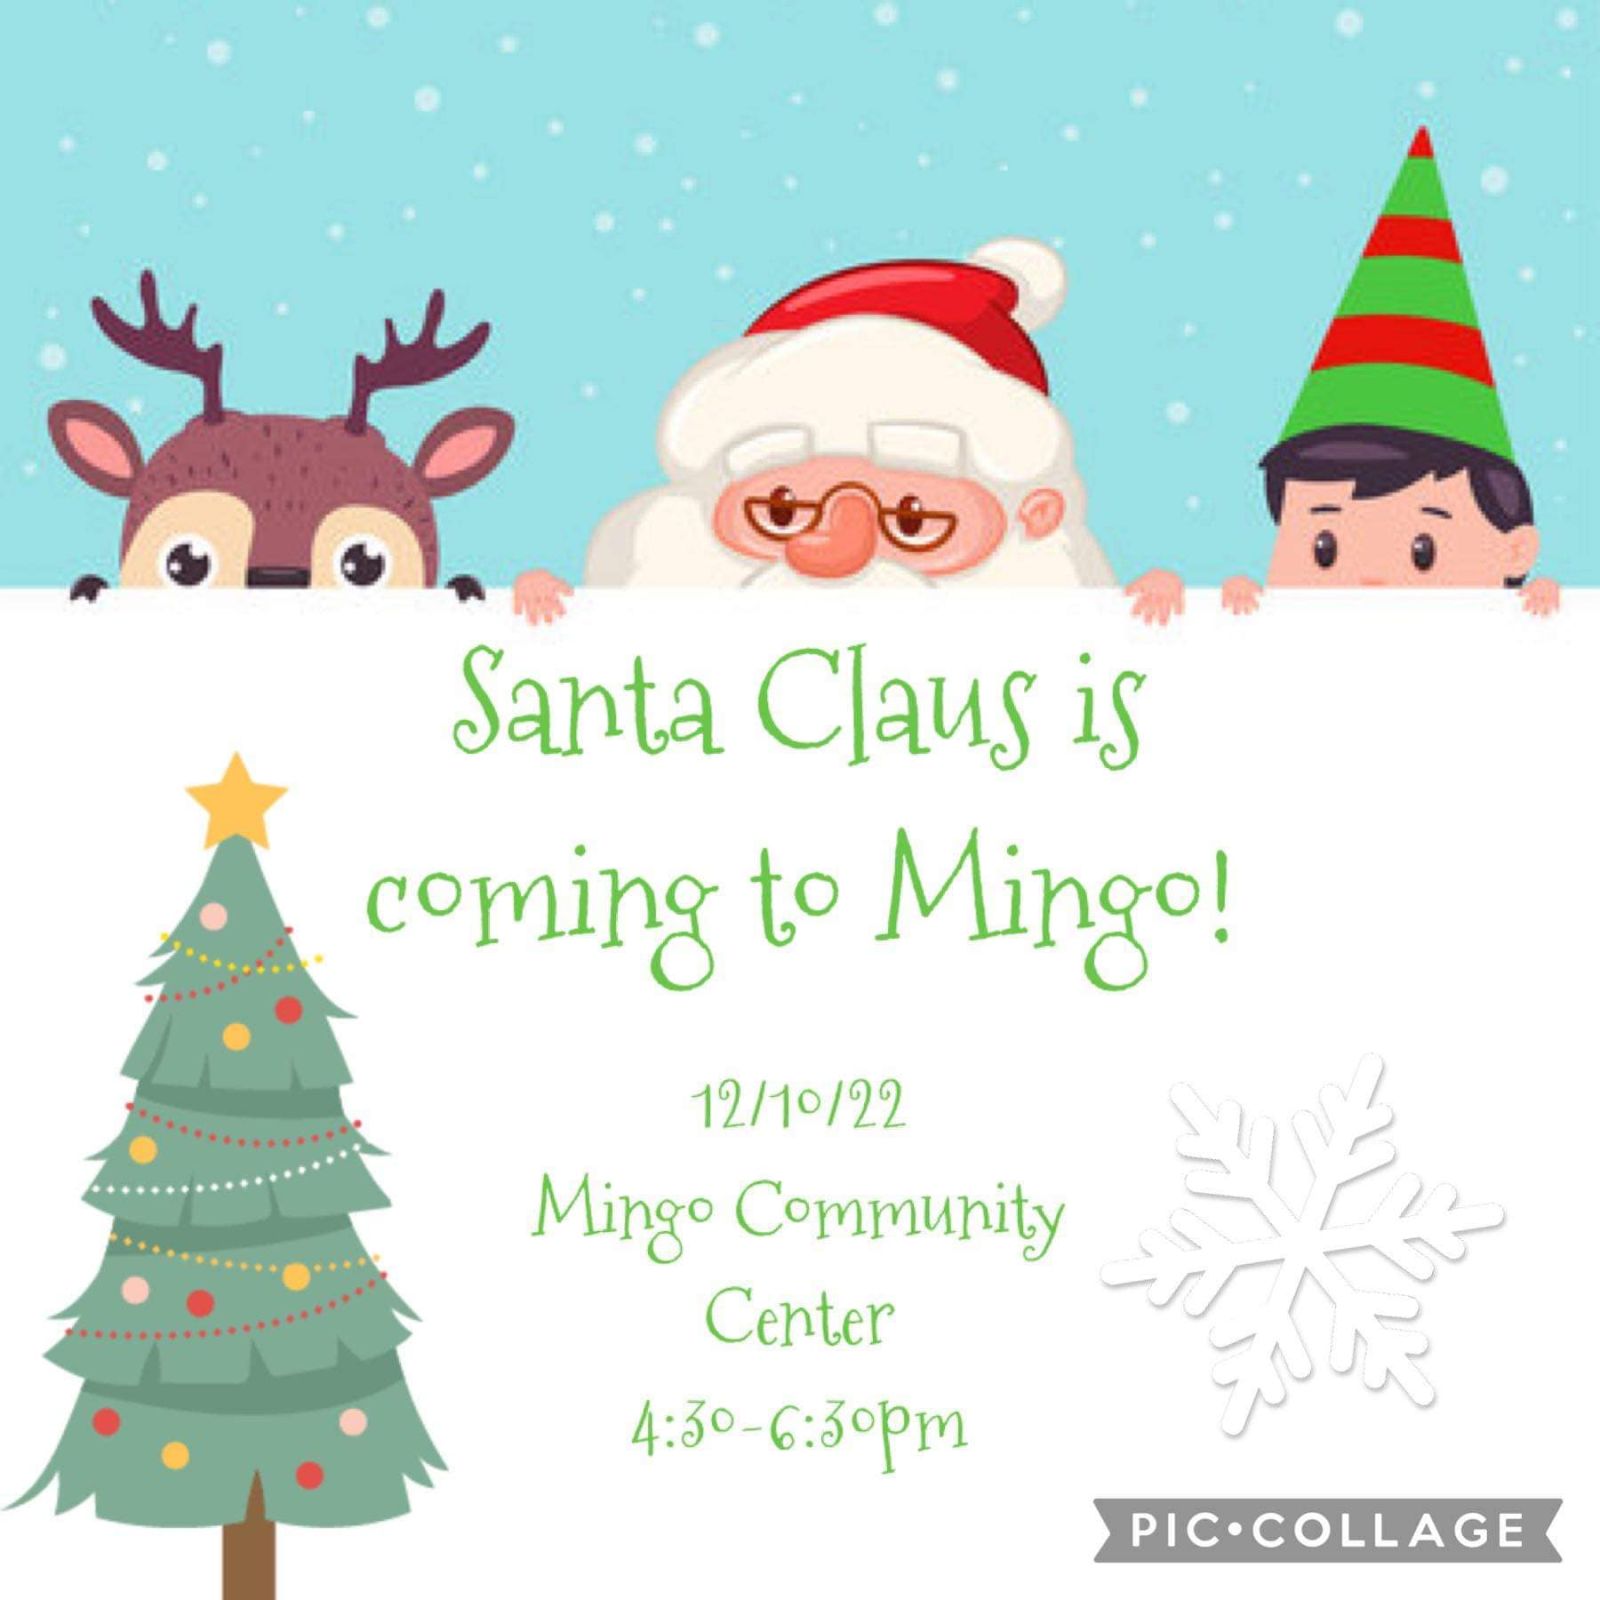 Event Promo Photo For Santa Visit to Mingo